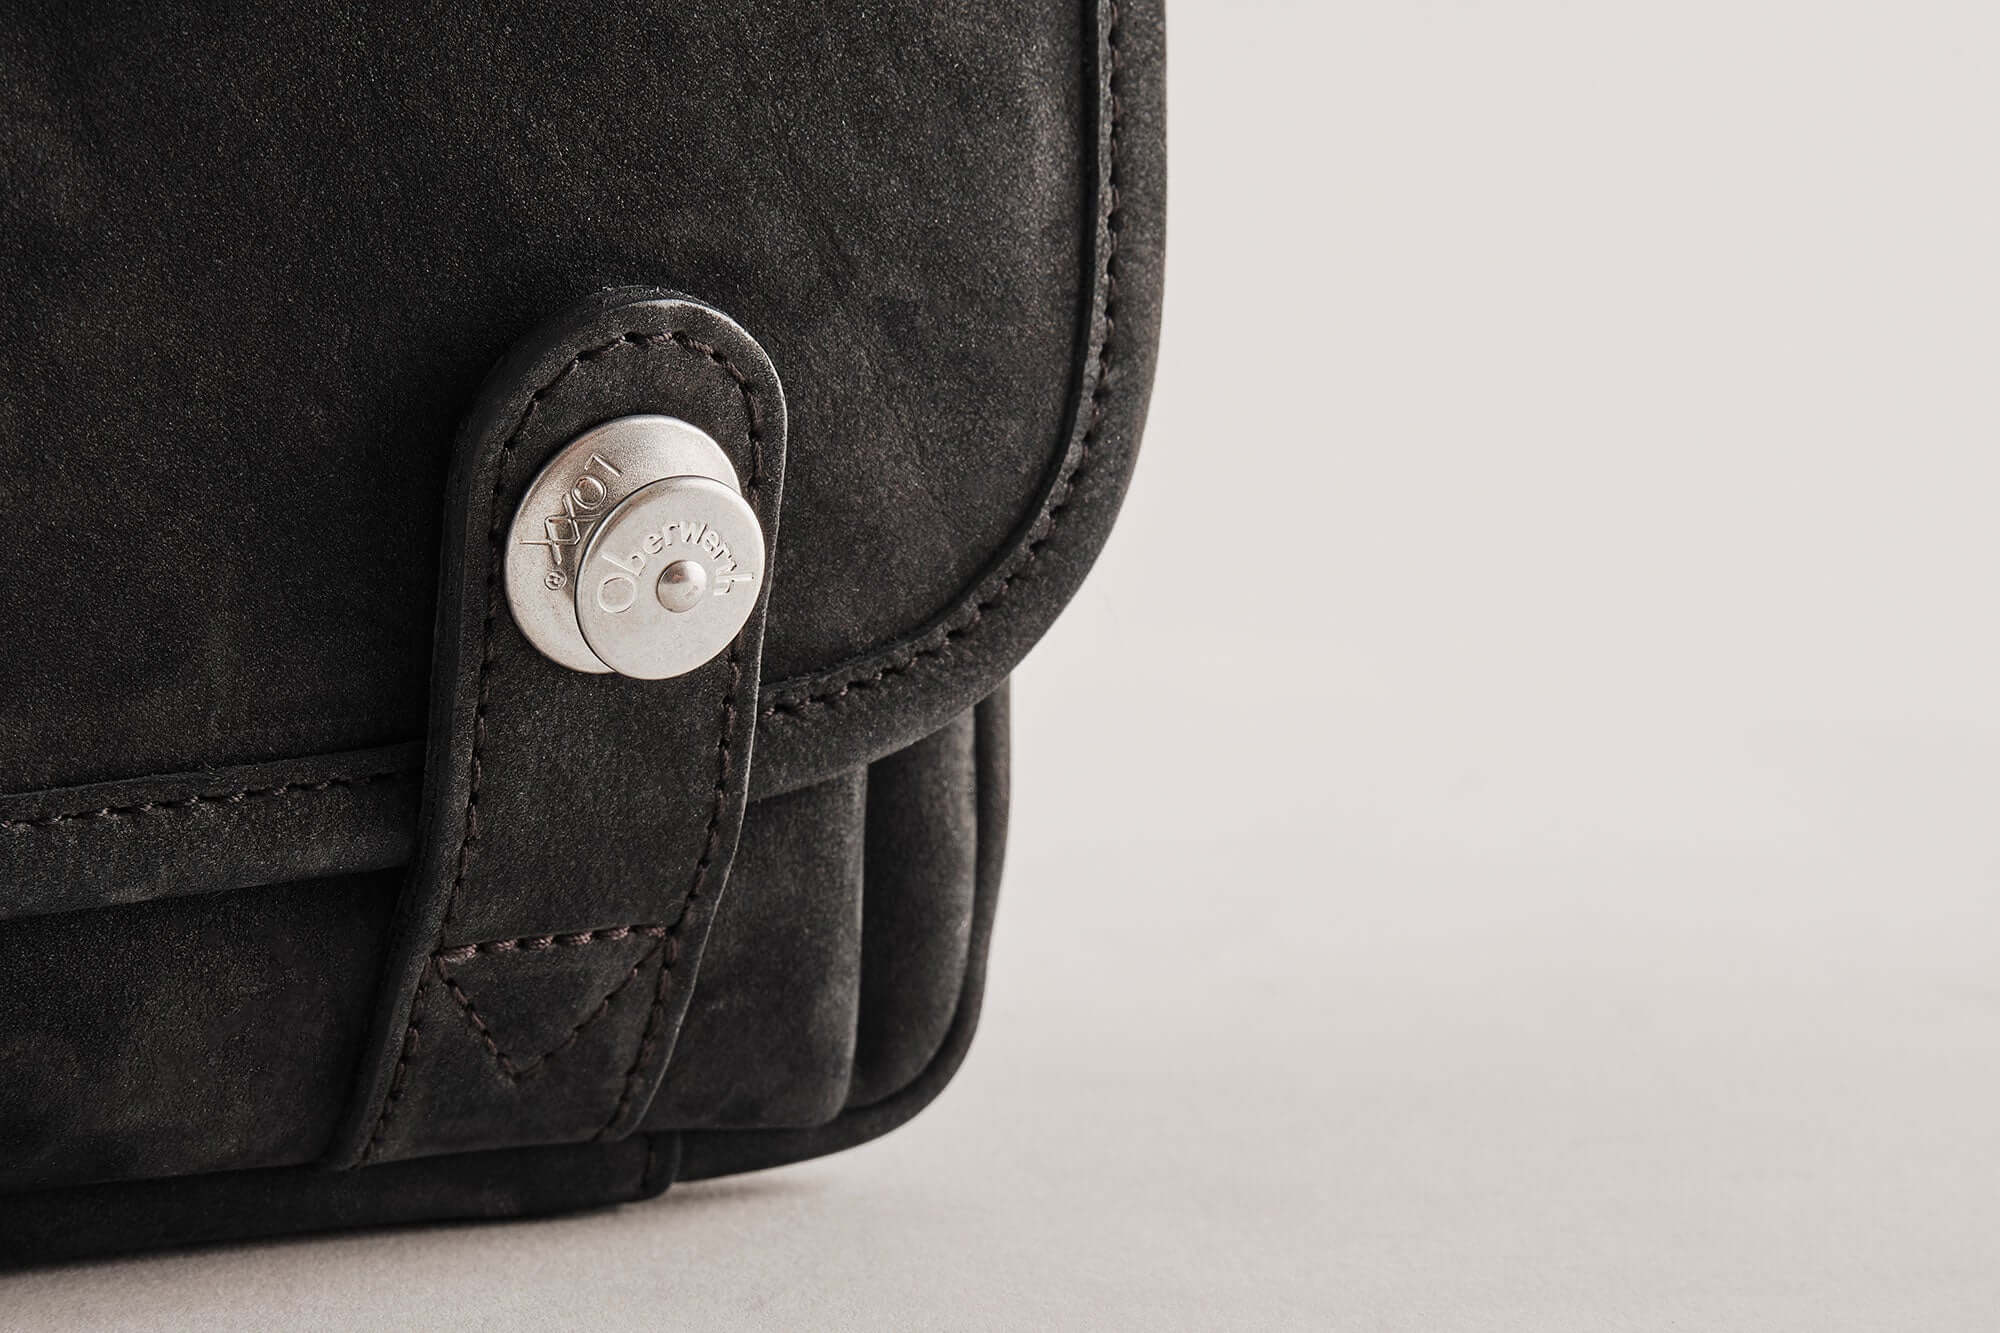 The Q Bag Nubuk Edition - Leica Q3 bag !Trade Fair Goods!